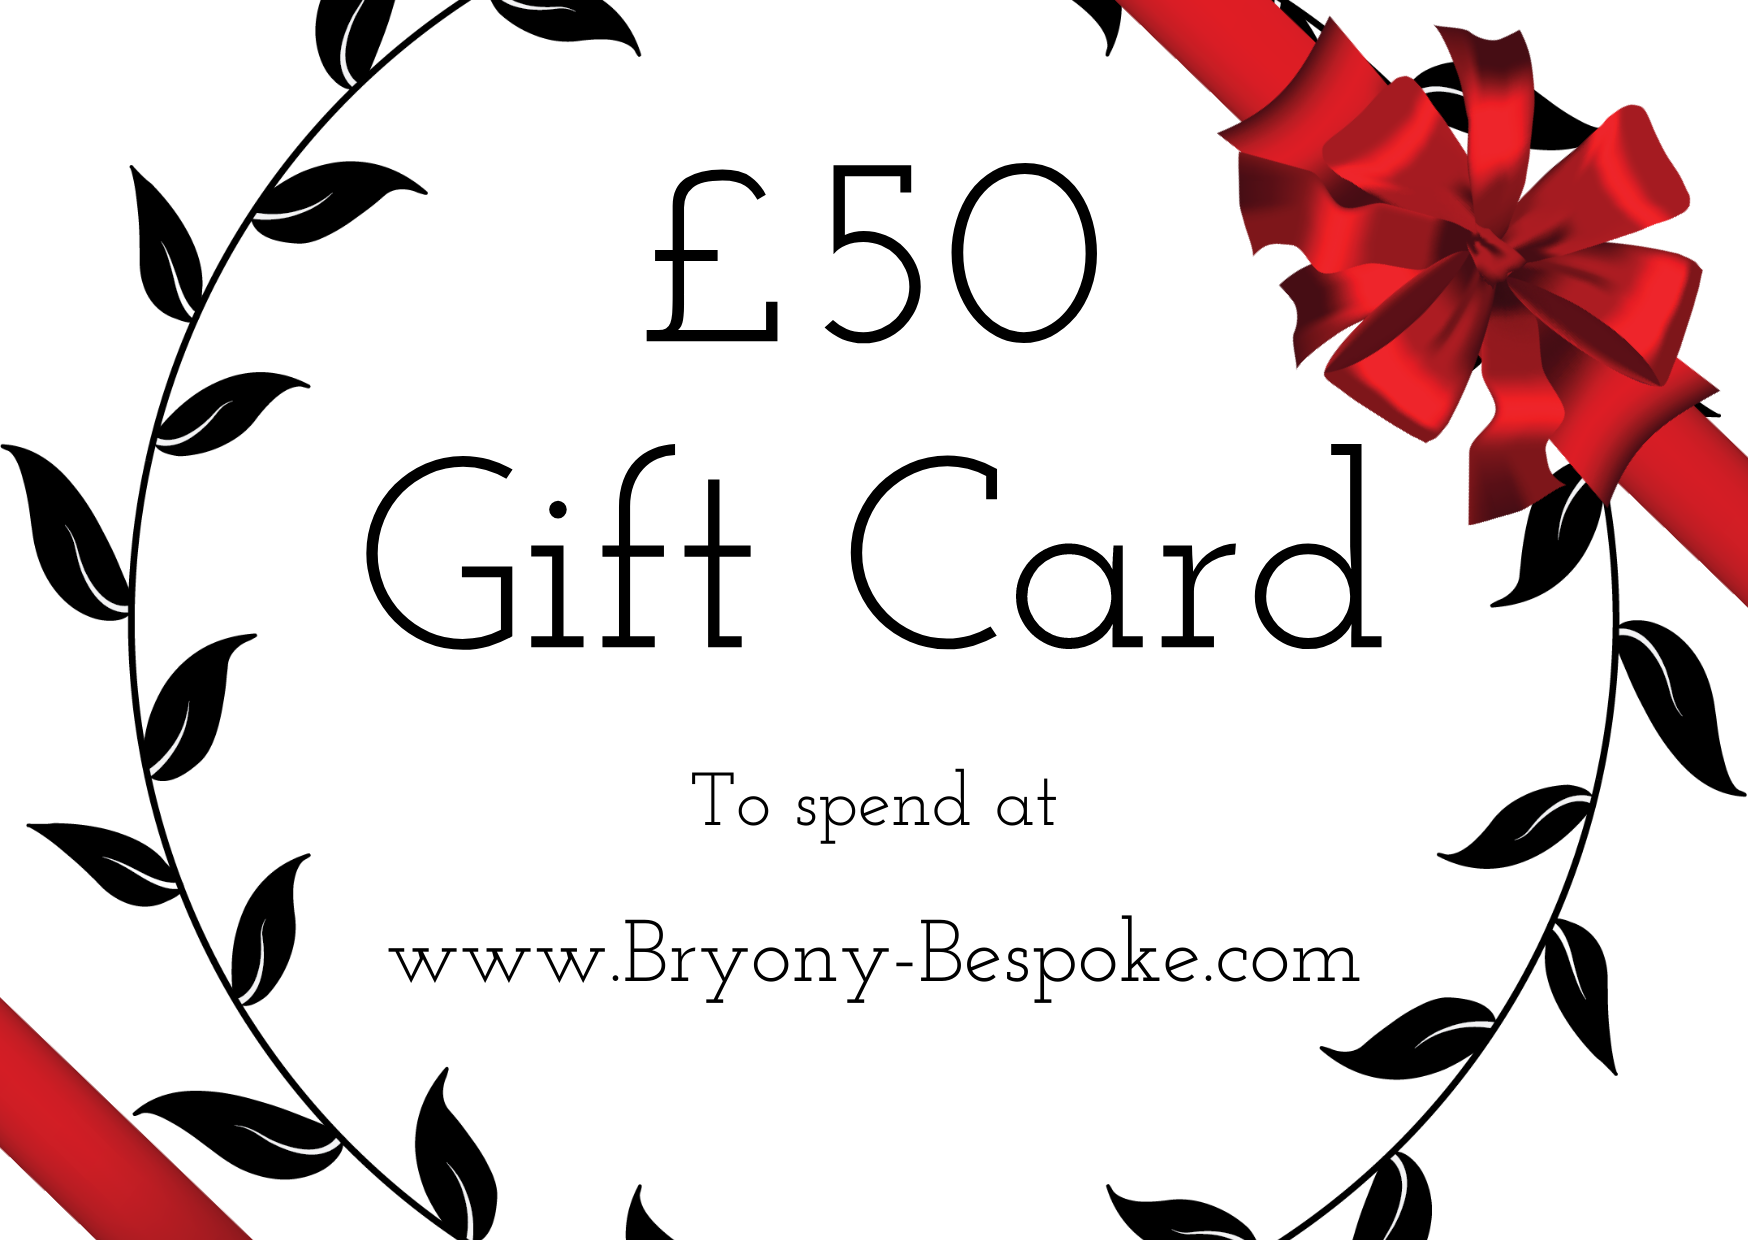 Bryony Bespoke Gift Card